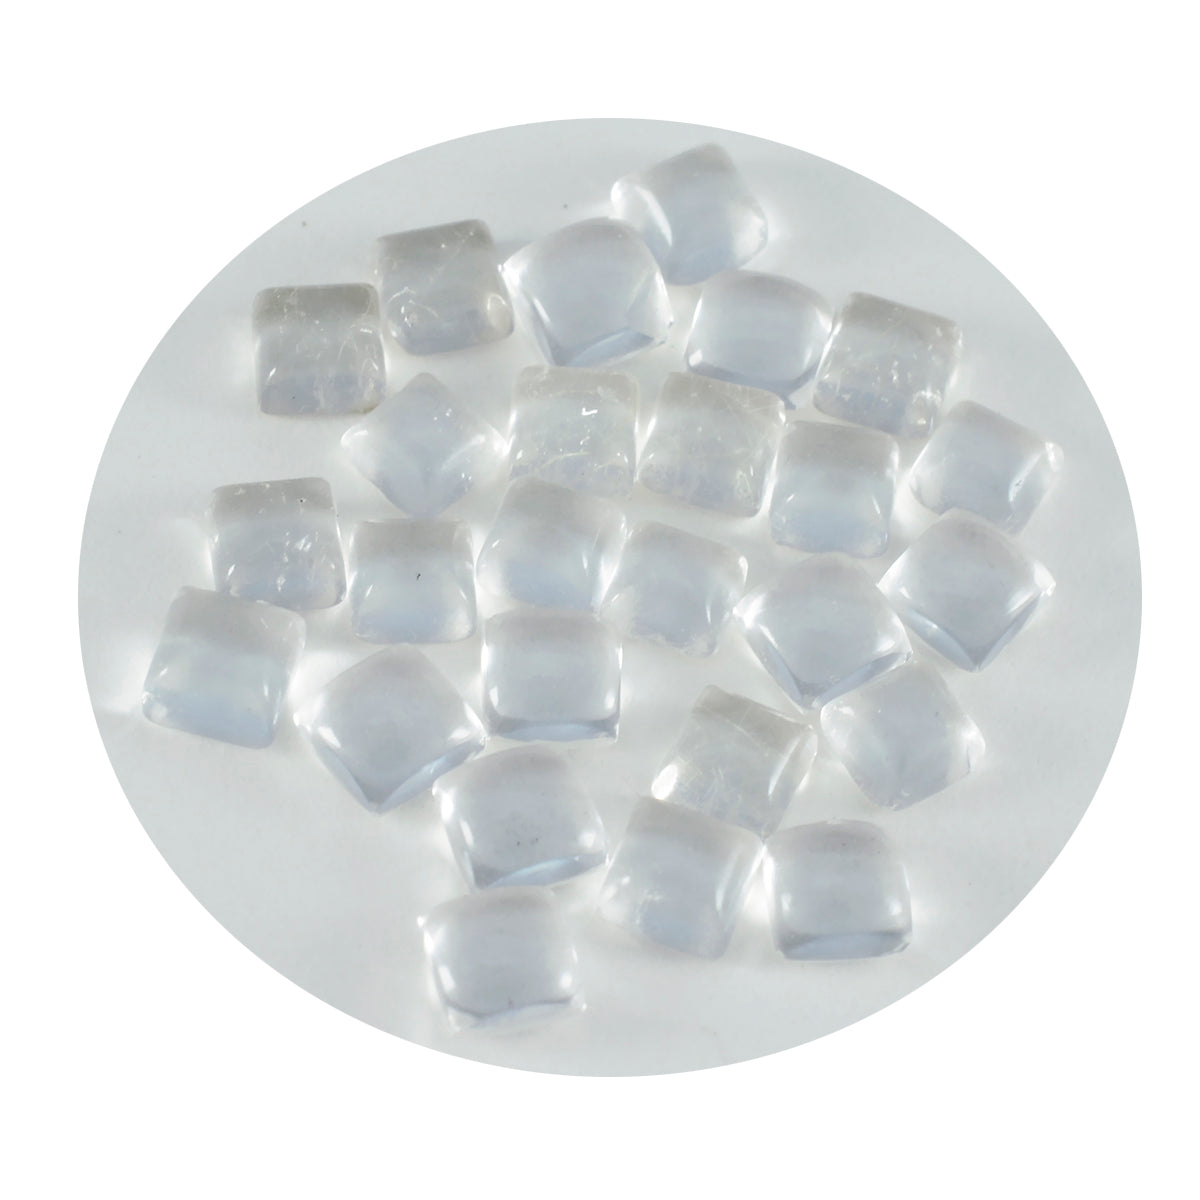 Riyogems 1PC White Crystal Quartz Cabochon 6x6 mm Square Shape excellent Quality Stone